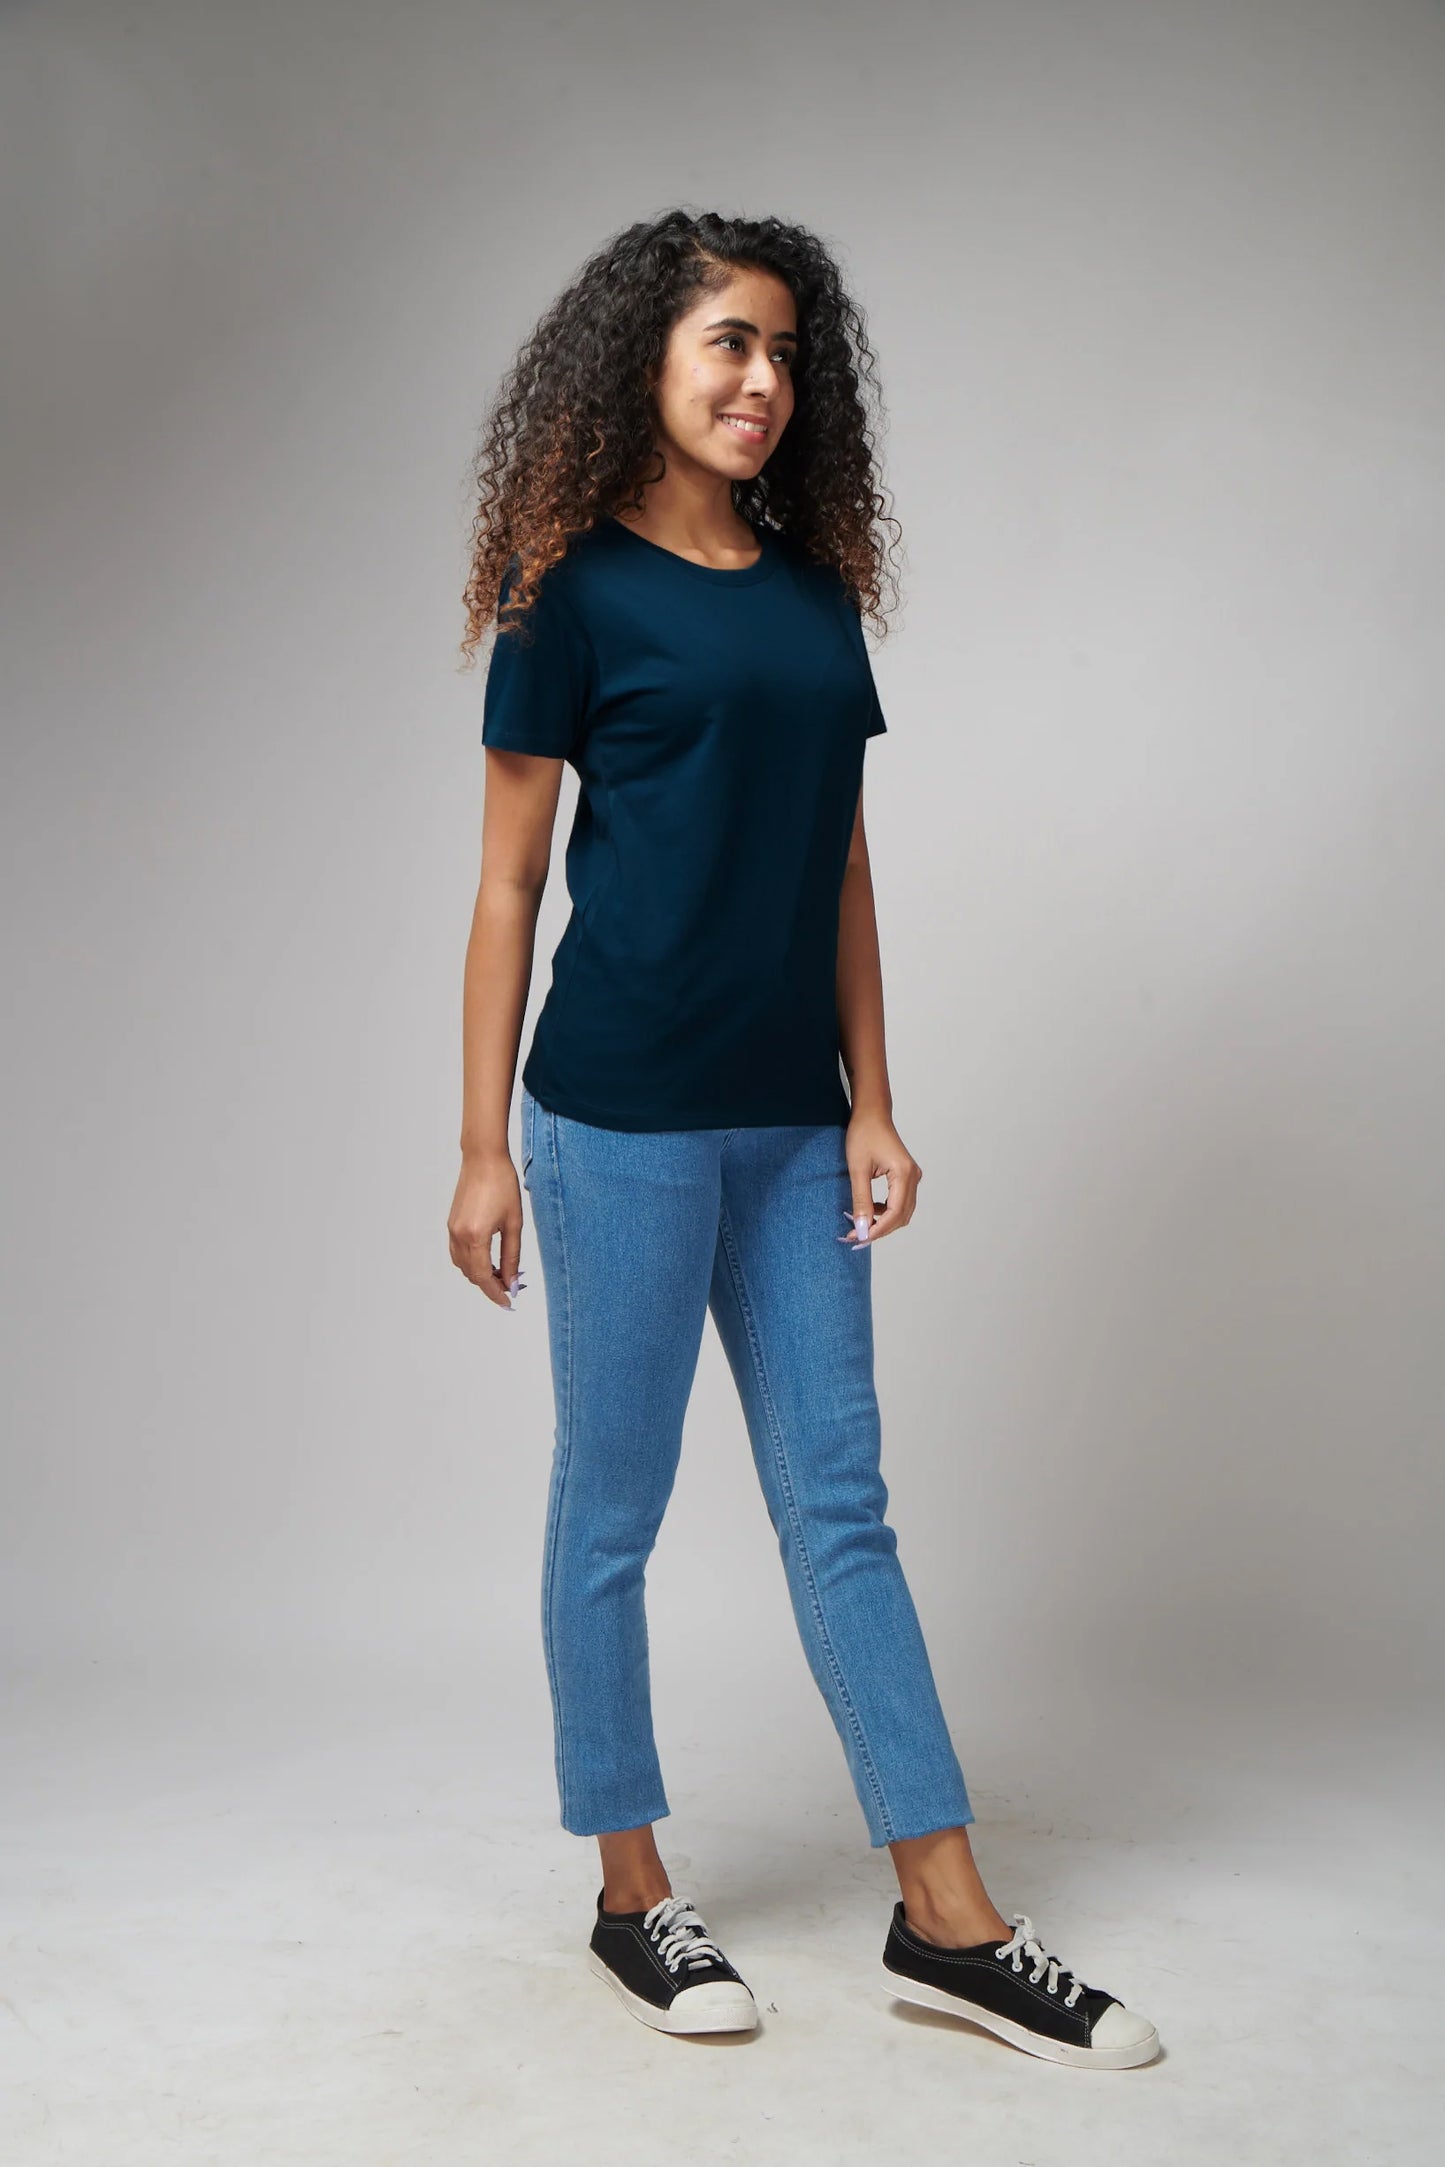 Women's Basic Navy Blue Half Sleeves T-Shirt